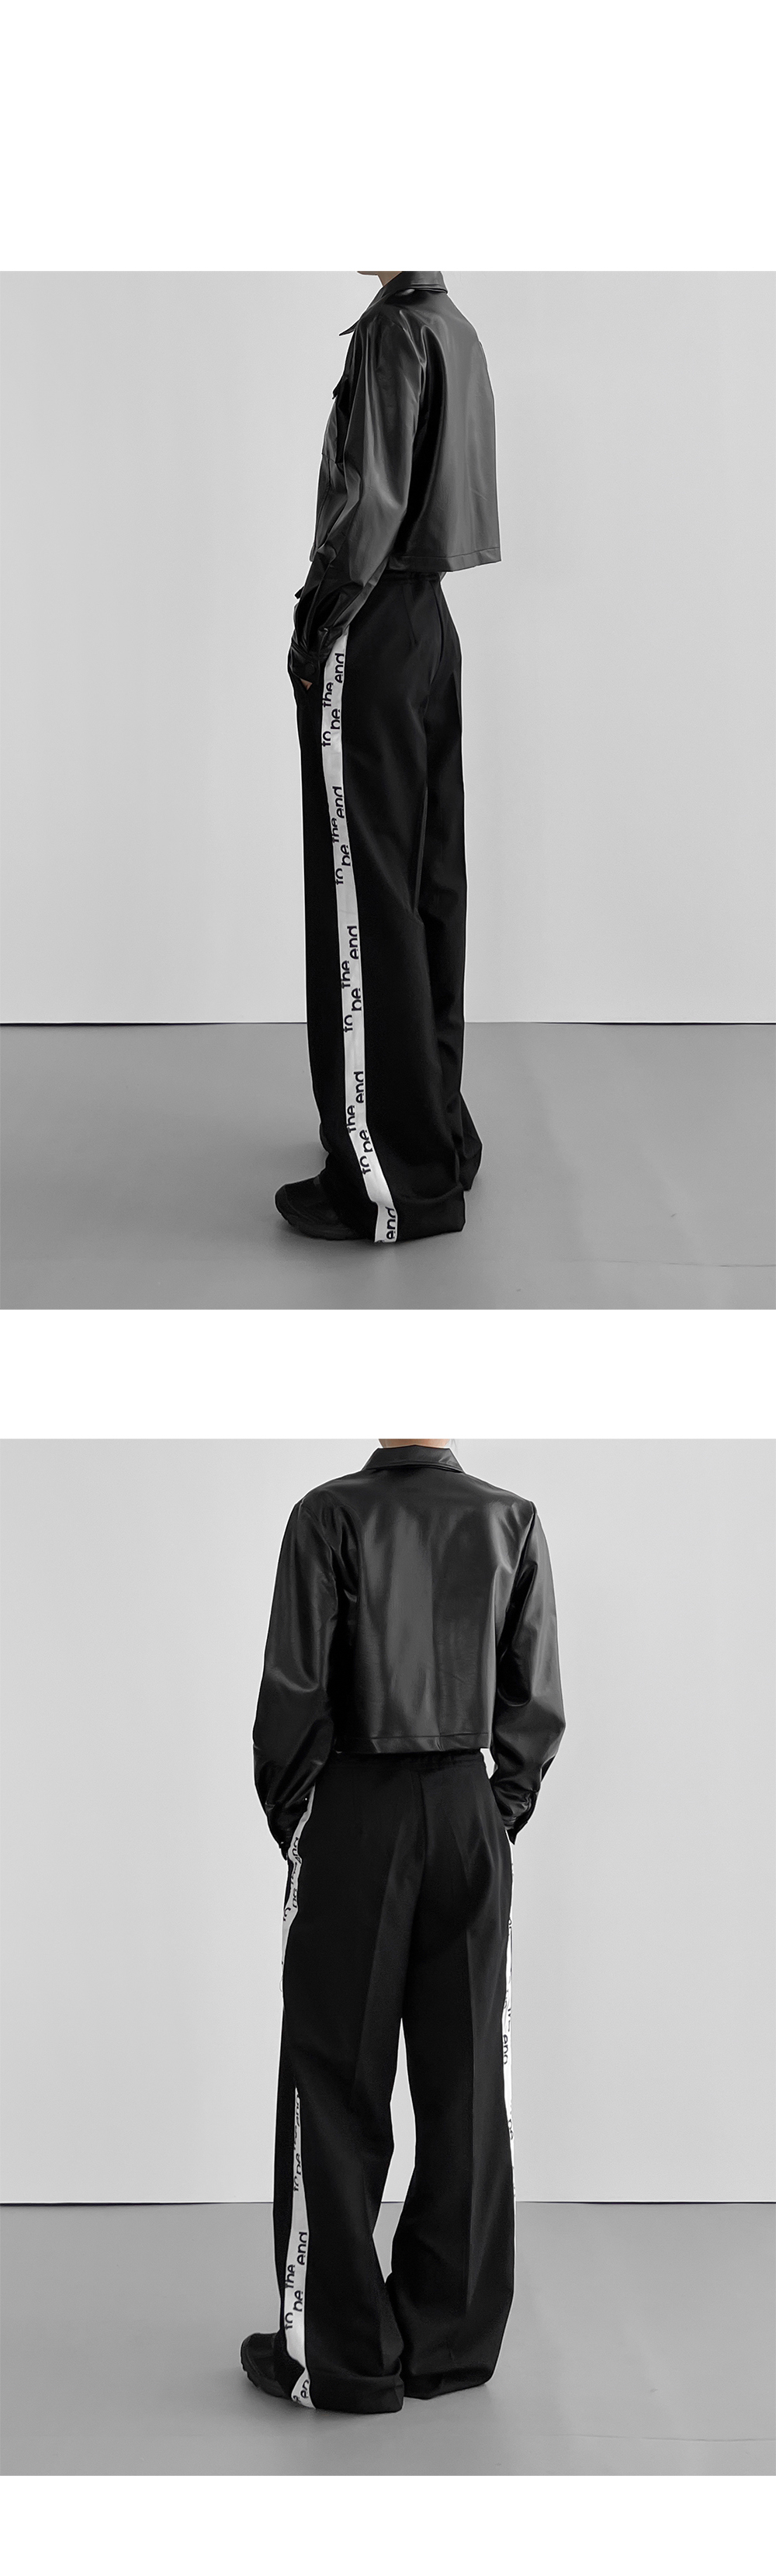 Down jacket model image-S1L9